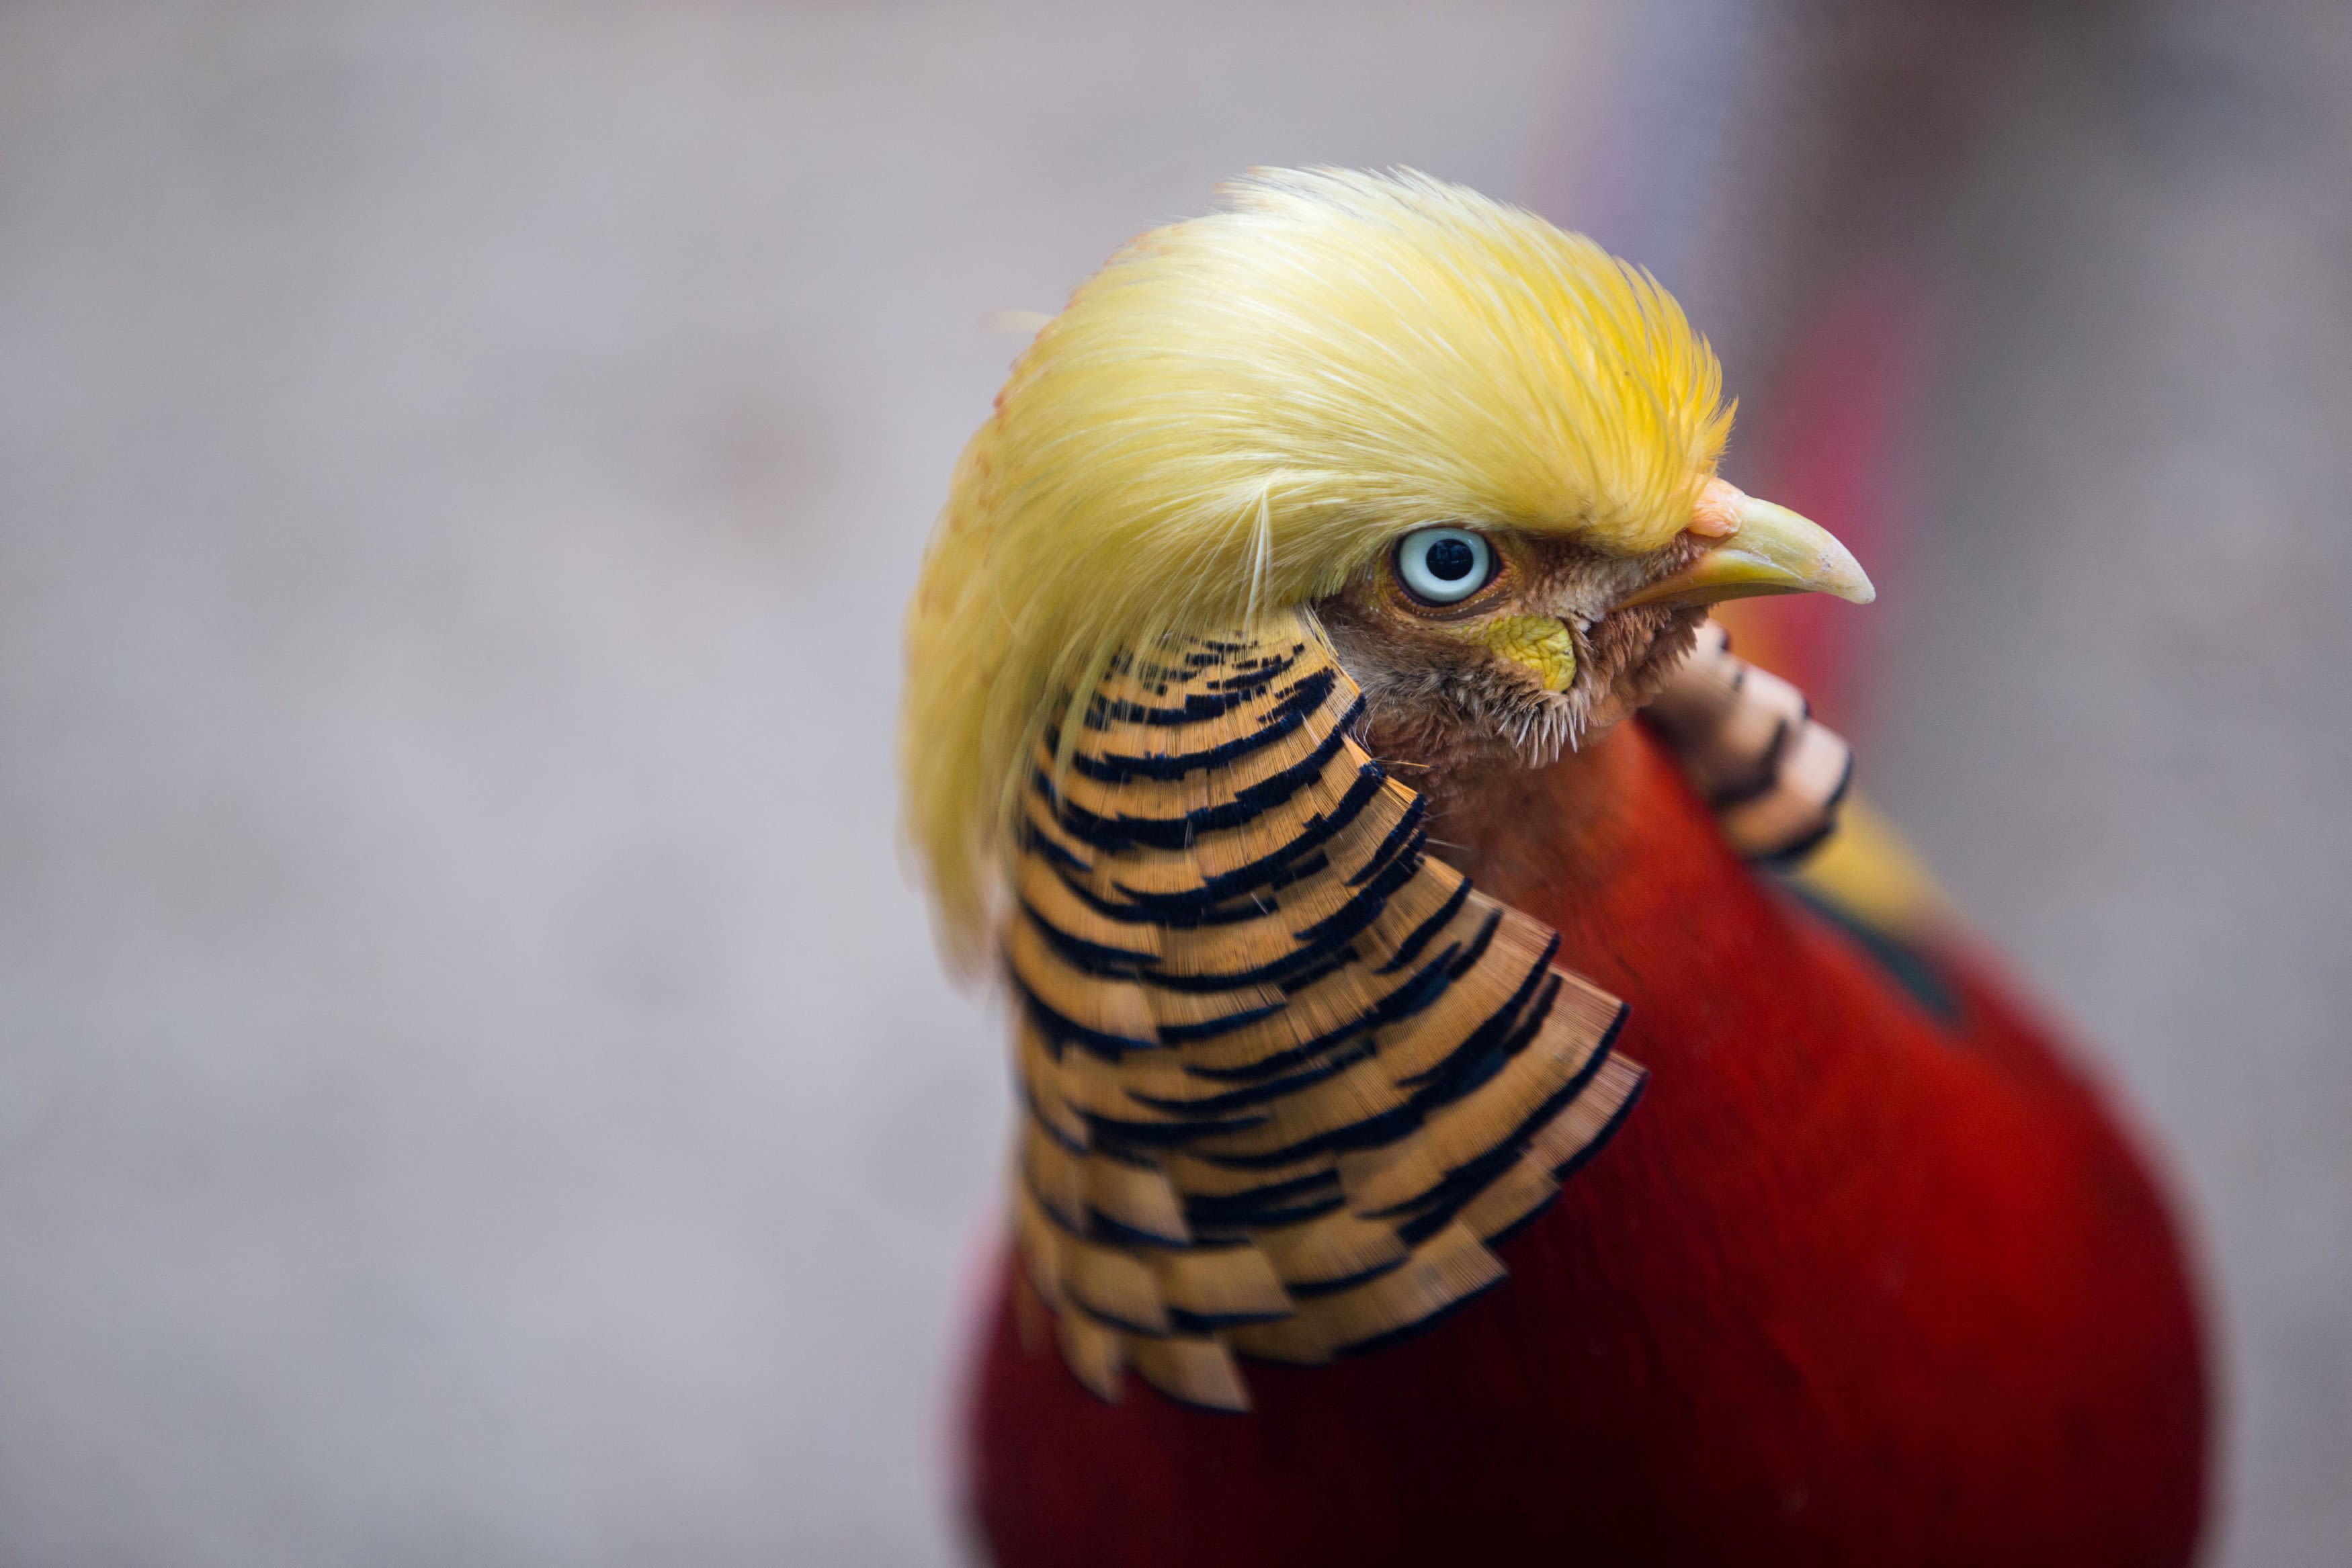 Haha guys, this bird looks like Donald Trump | CNN Politics